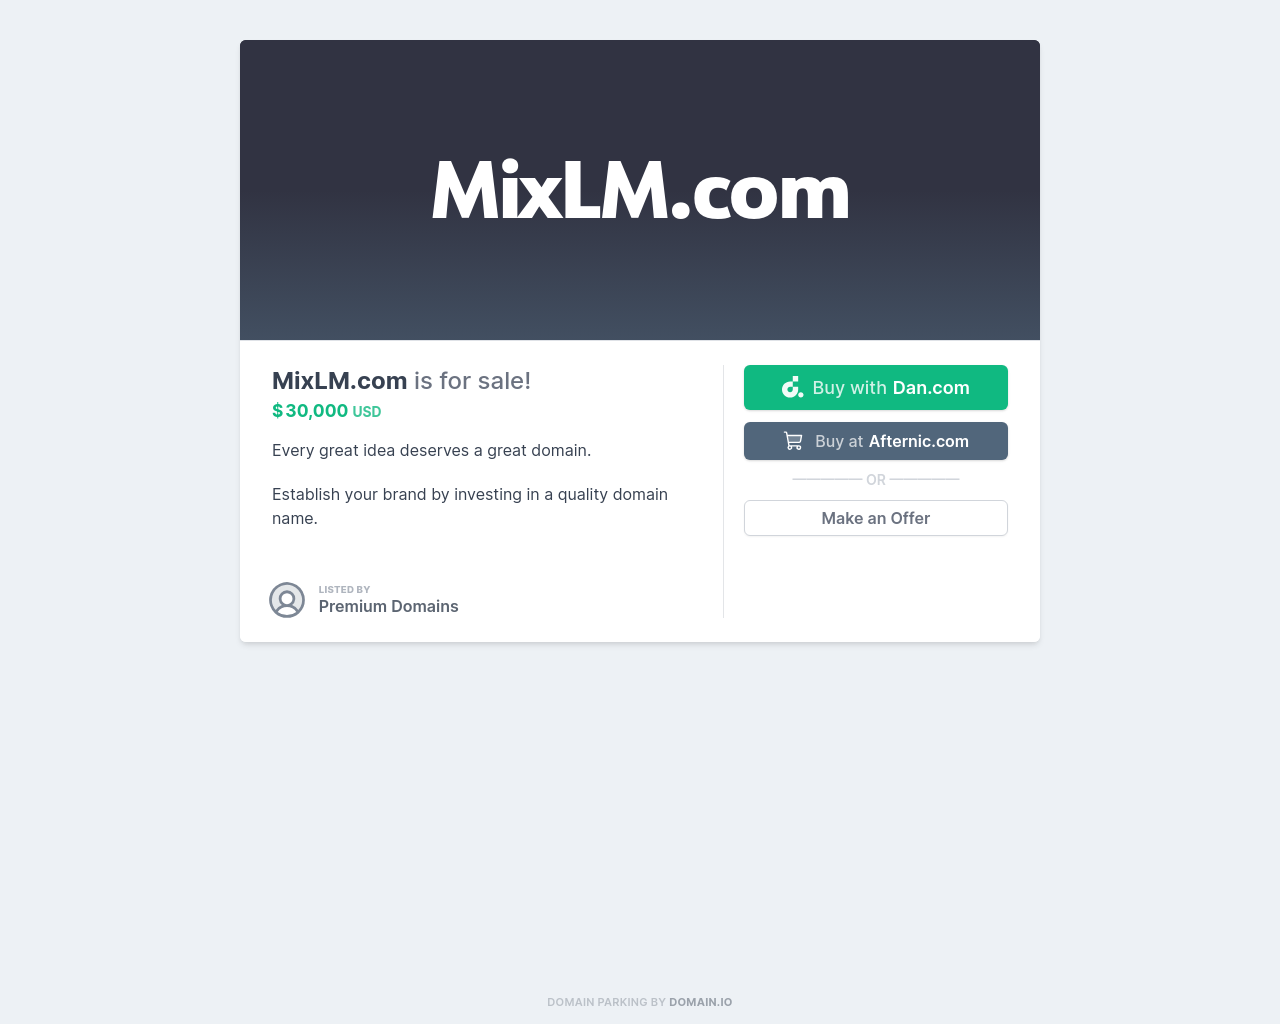 mixlm.com